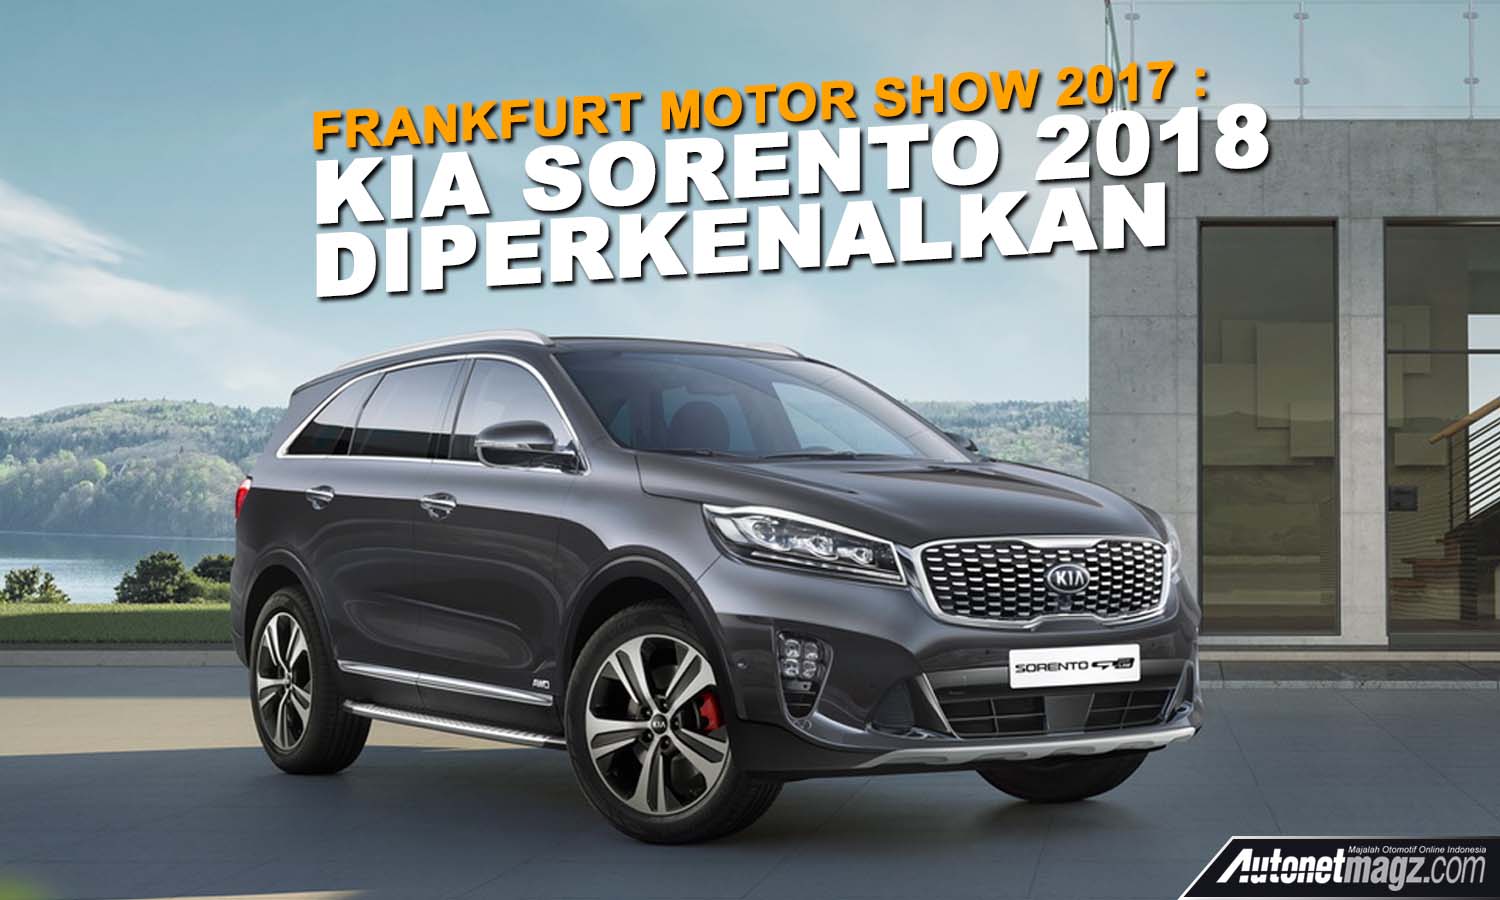 Berita, KIA Sorento 2018 cover: Frankfurt Motor Show 2017 : KIA Sorento 2018 Diperkenalkan